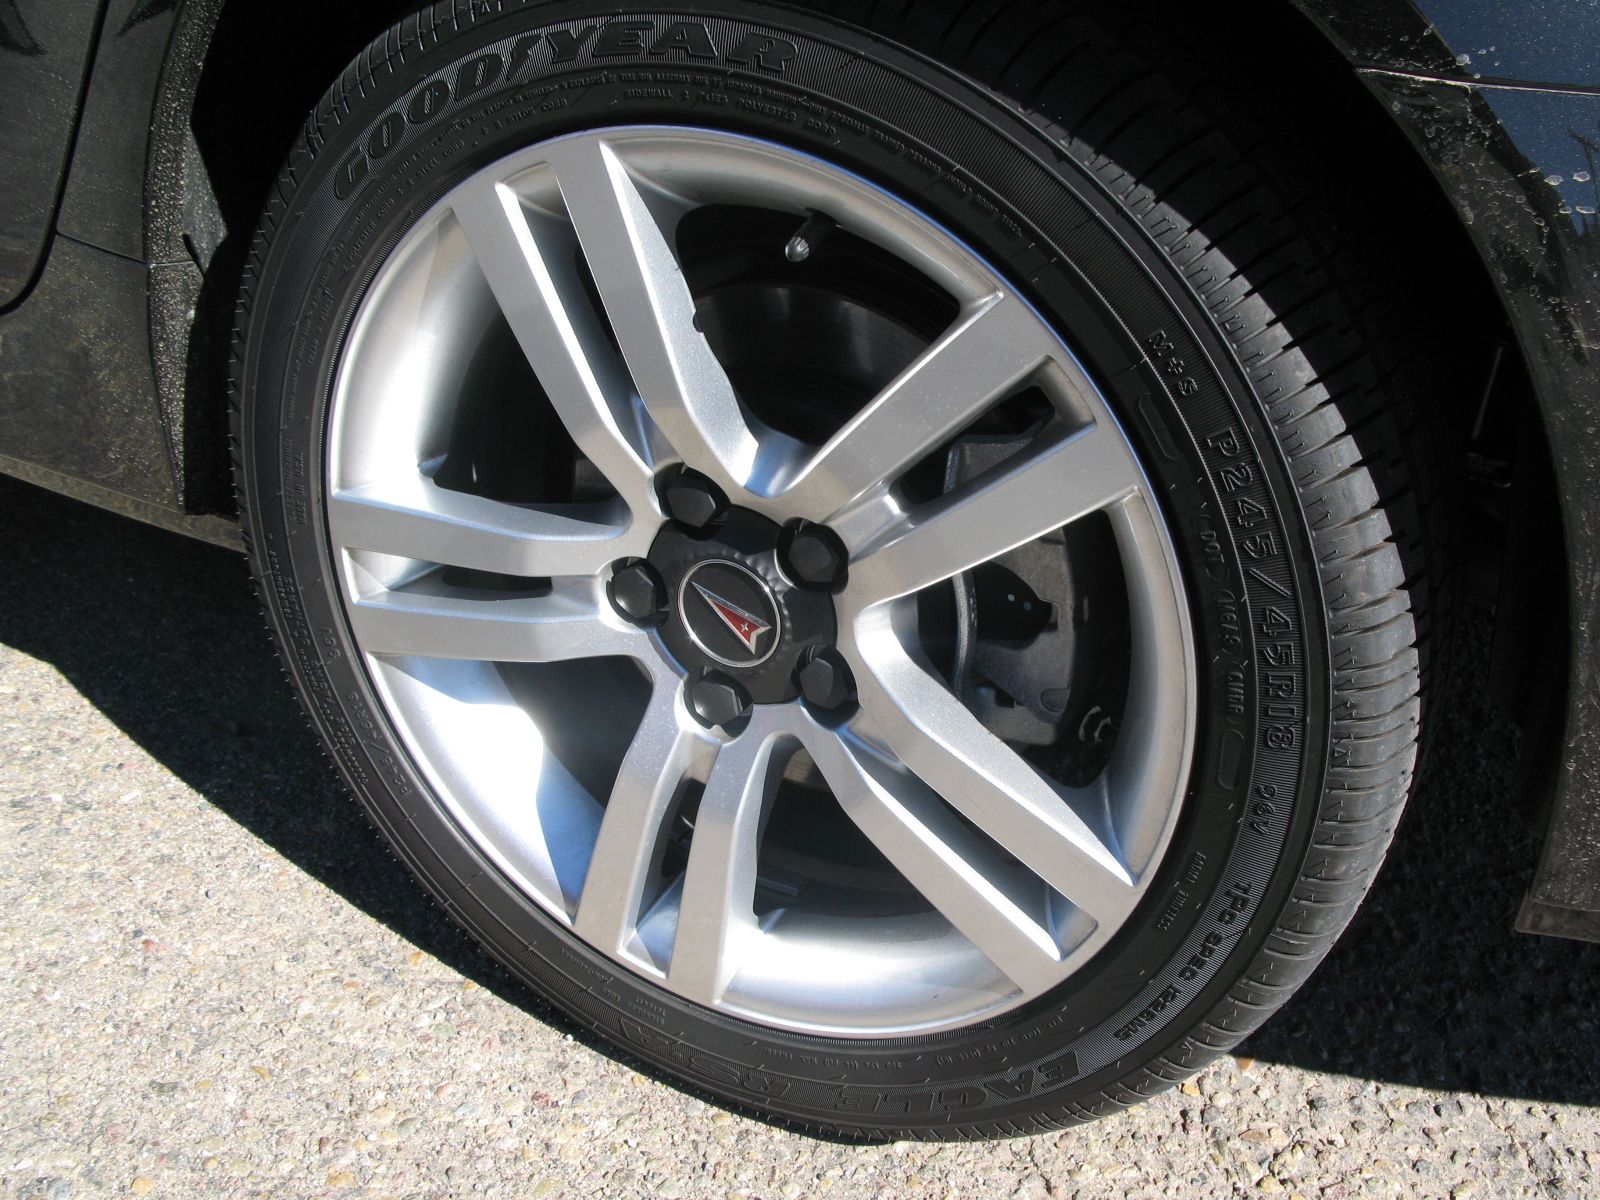 2008 Pontiac G8 test drive